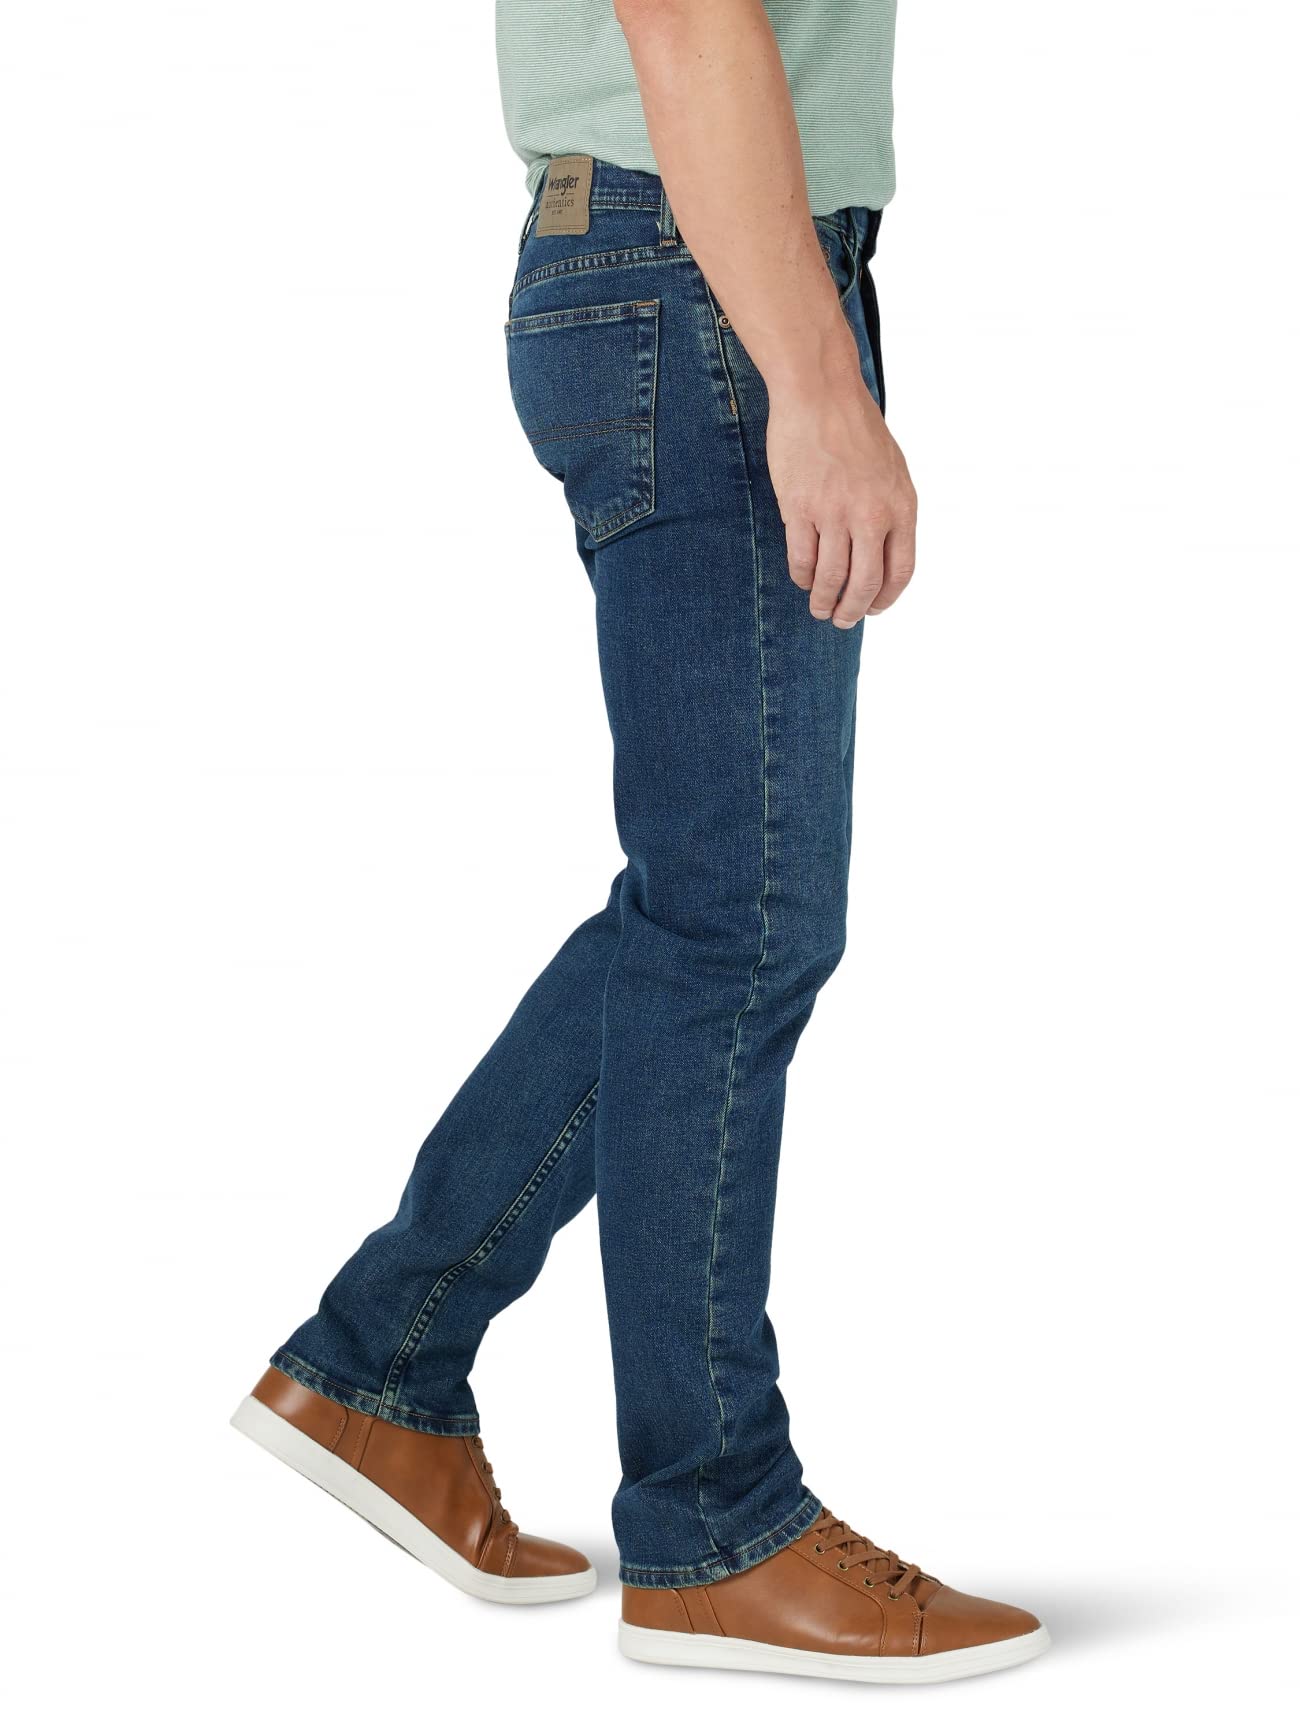 Wrangler Authentics Men's Regular Fit Comfort Flex Waist Jean, Rhodes, 35W x 30L